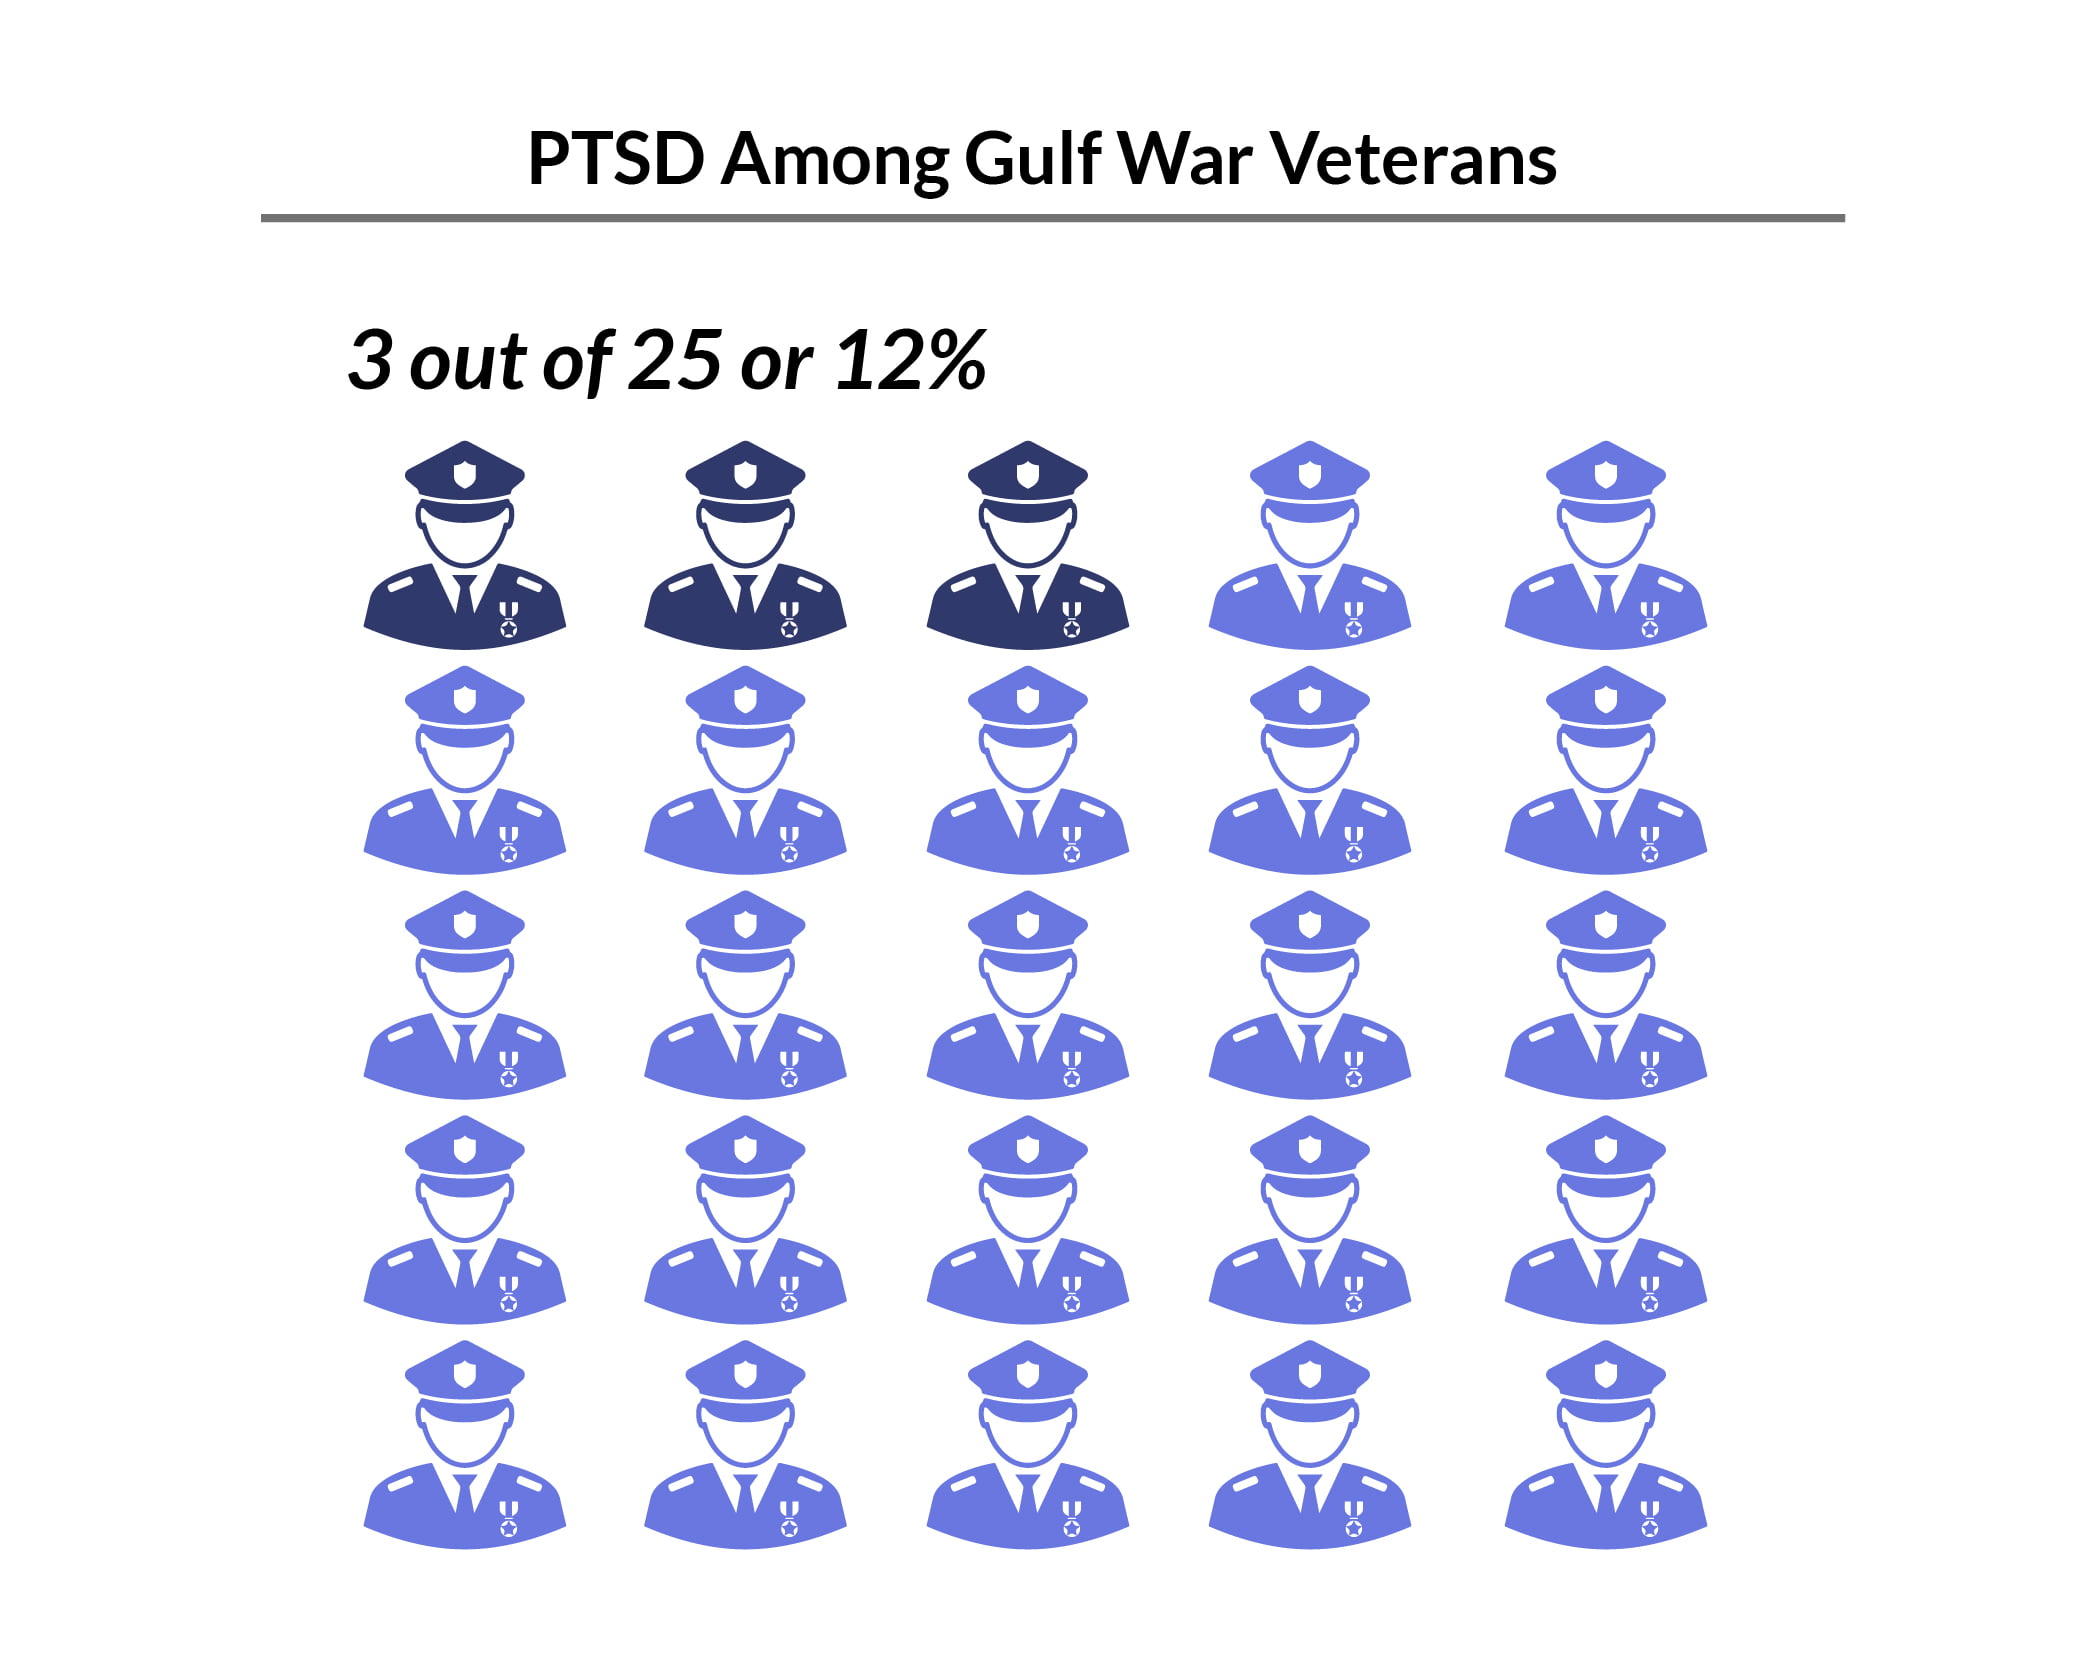 Percentage graph of PTSD among Gulf War veterans